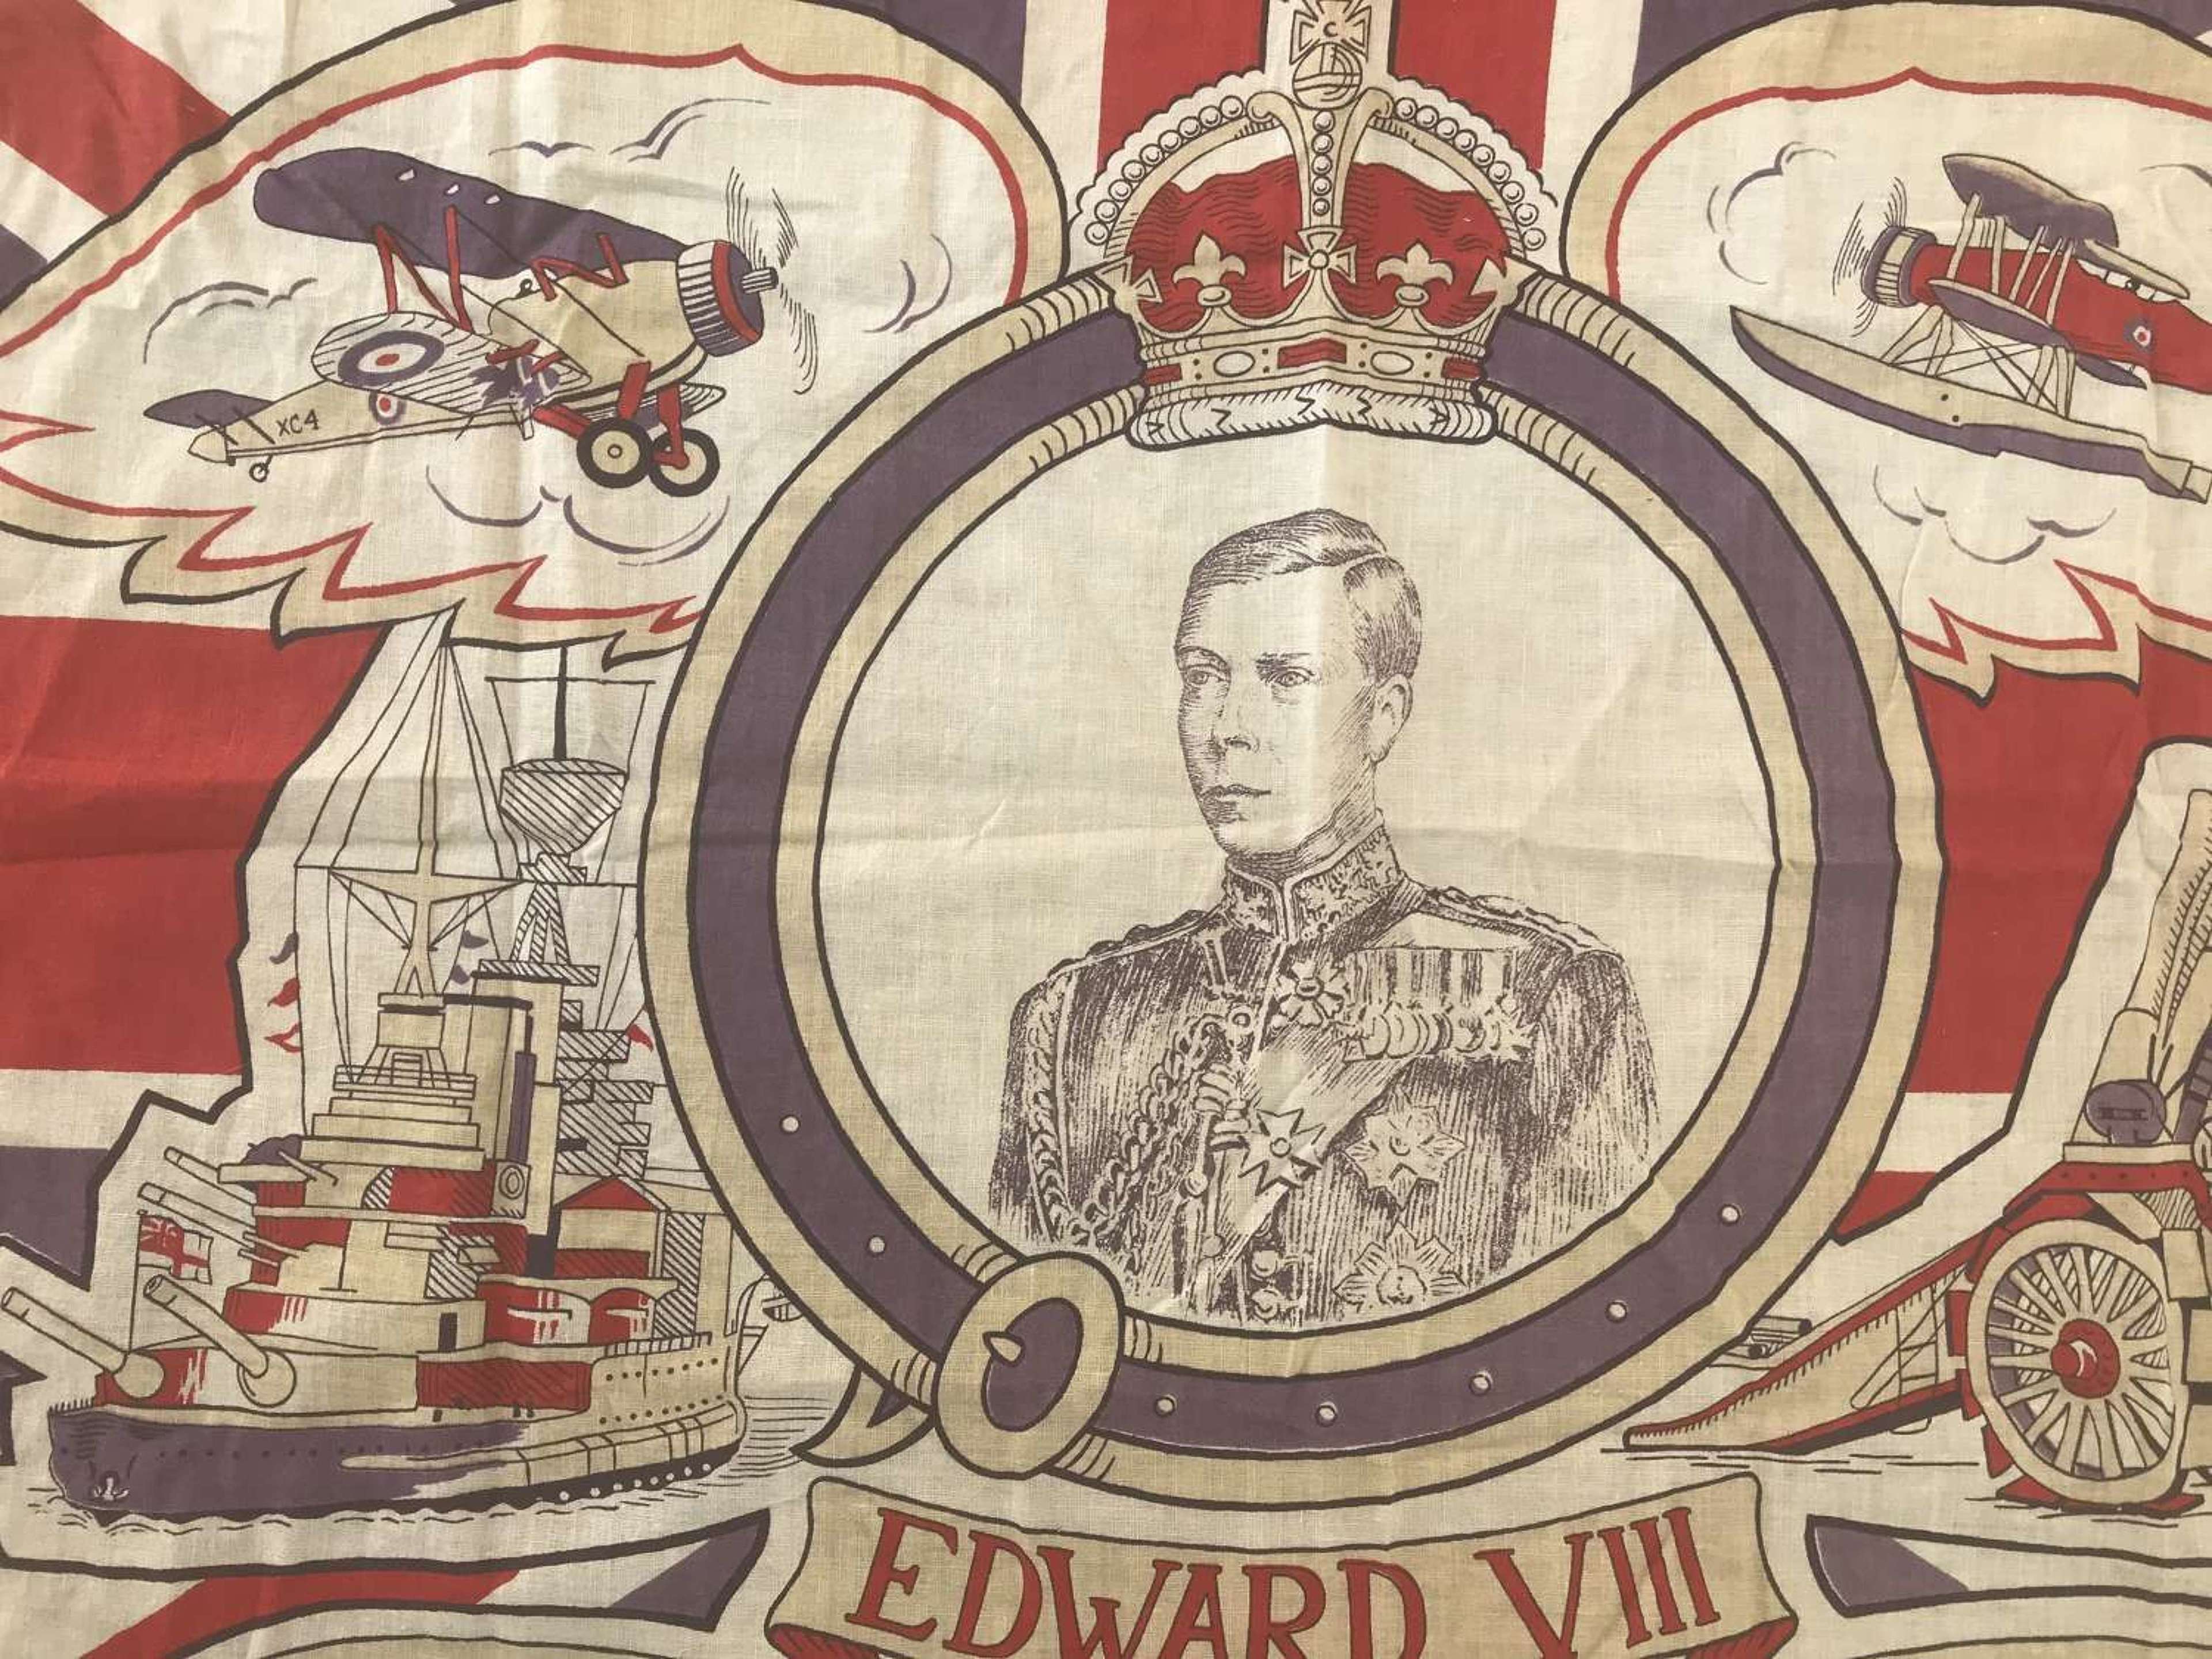 Edward VIII Coronation Medals 1936-1937 King and Emperor Selection See Menu 